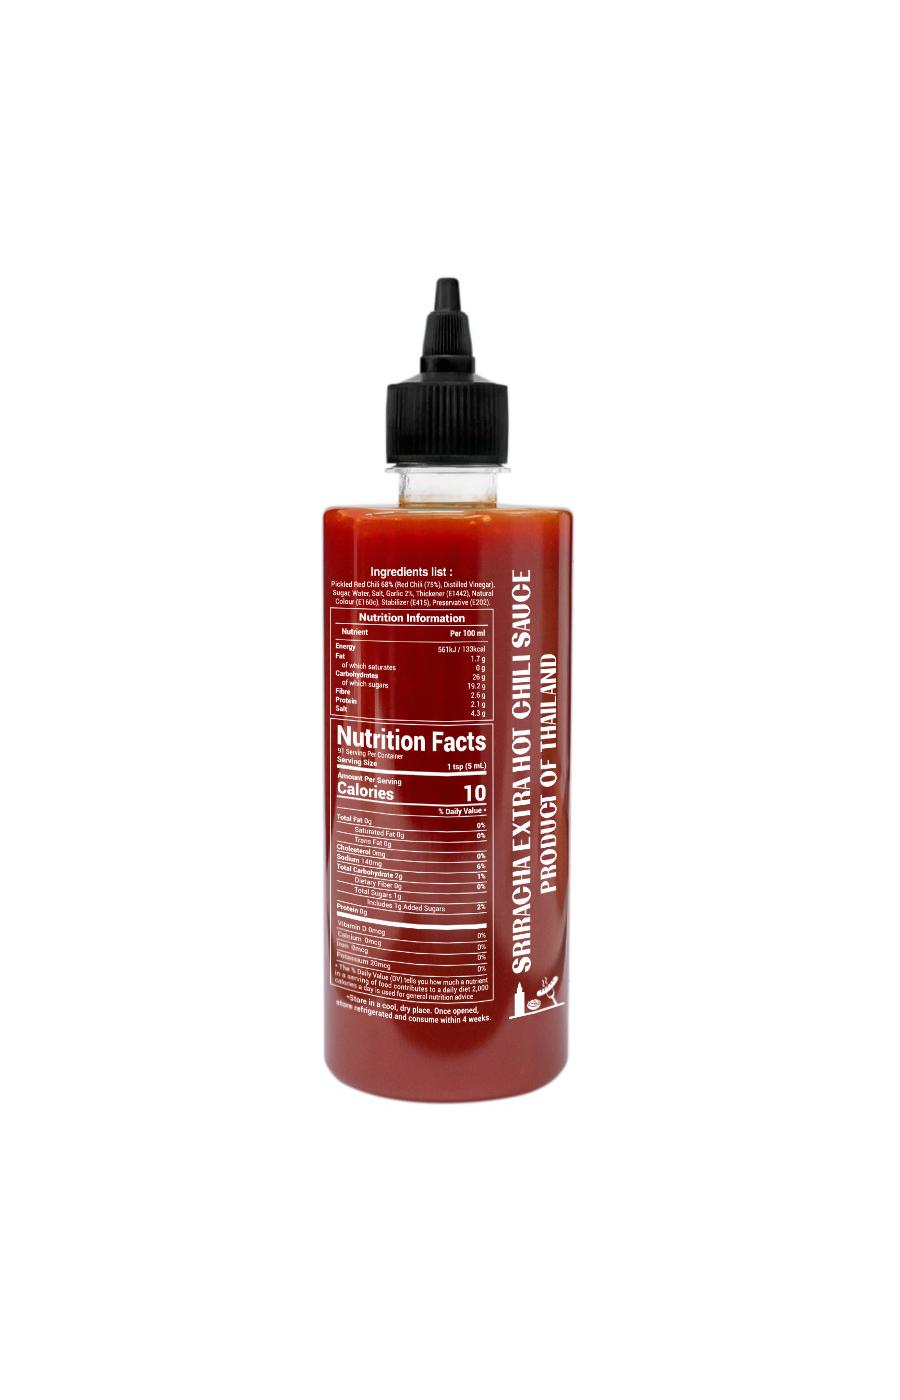 J Lek Sriracha Extra Hot Chili Sauce; image 3 of 3